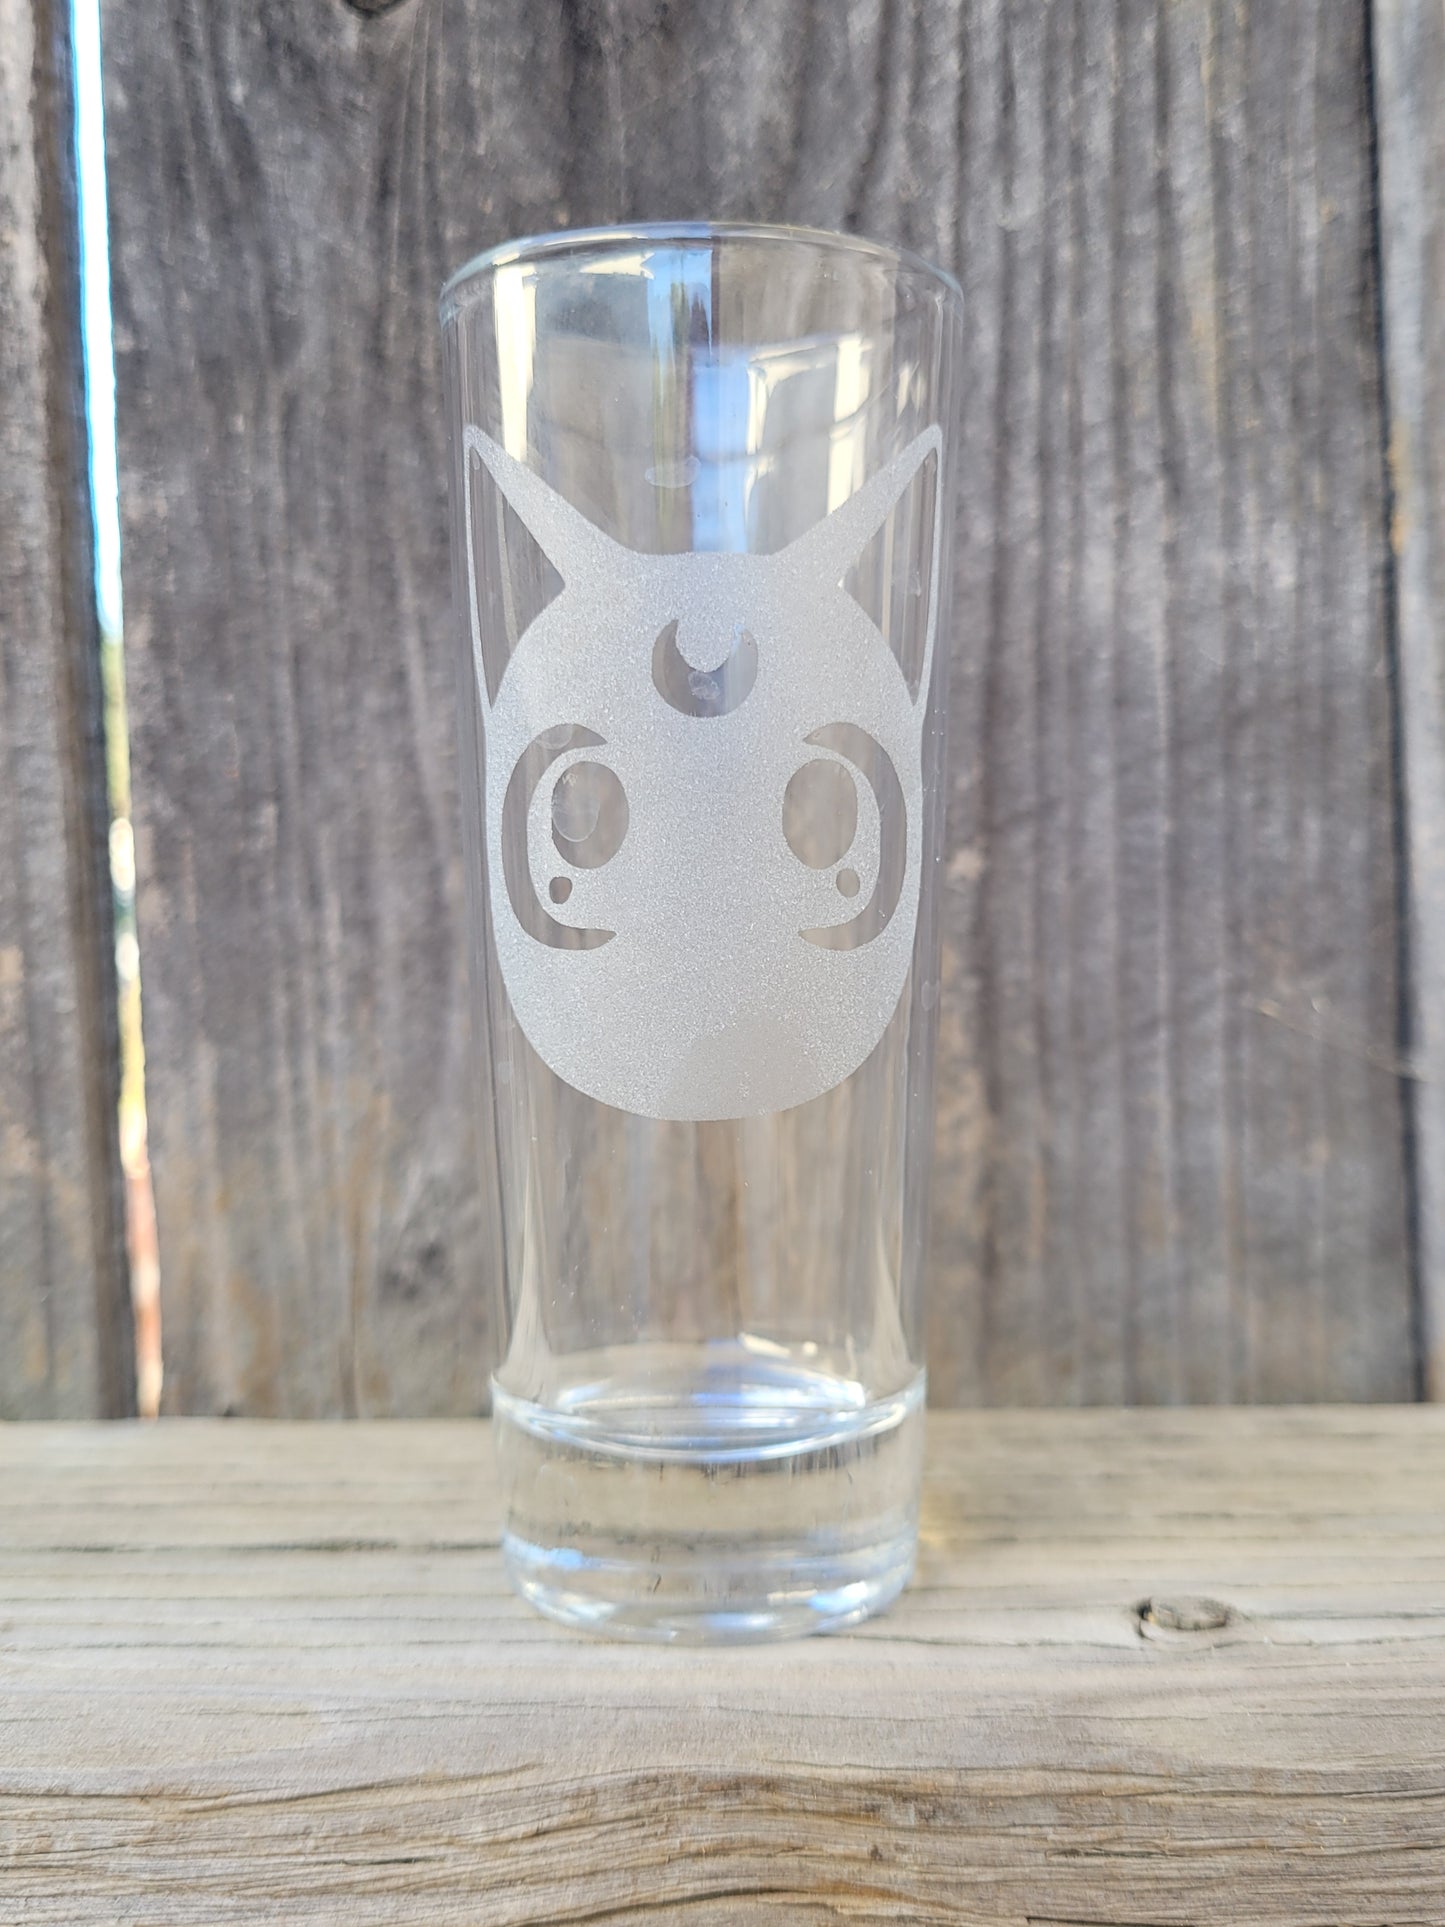 Luna Cat Face Sailormoon 2 oz Shot Glass - Made to Order